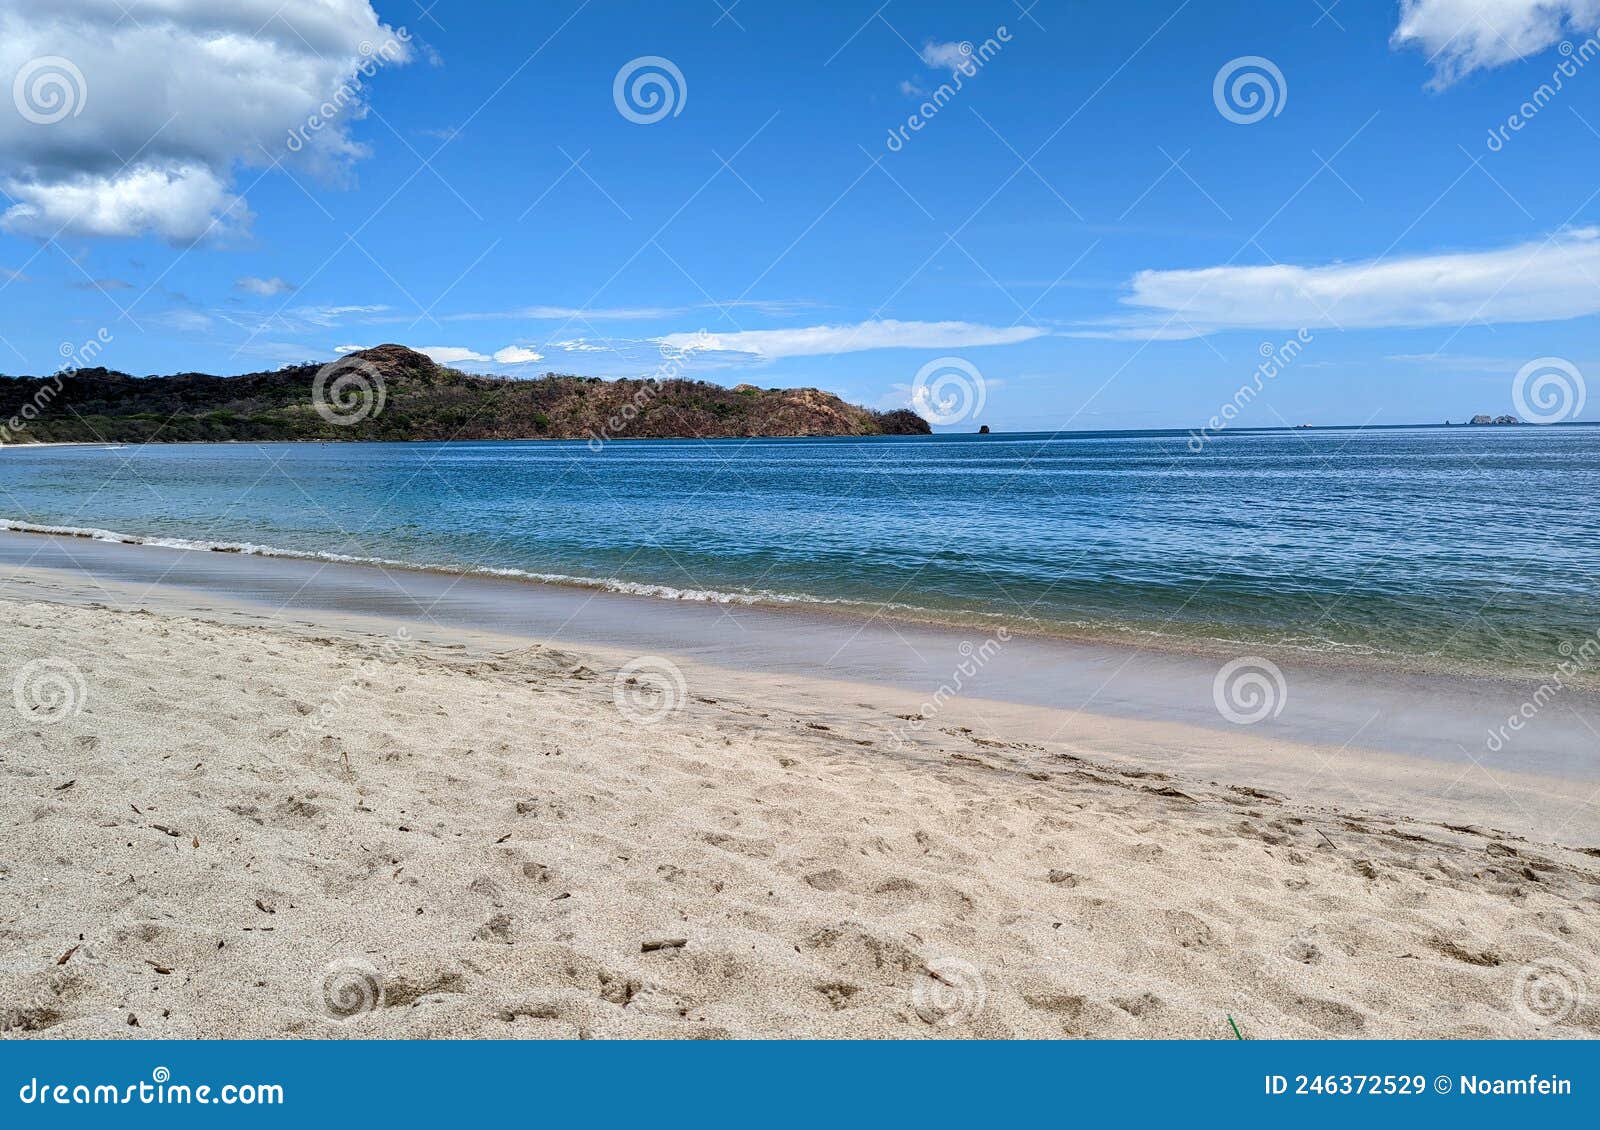 playa conchal beach in costa rica